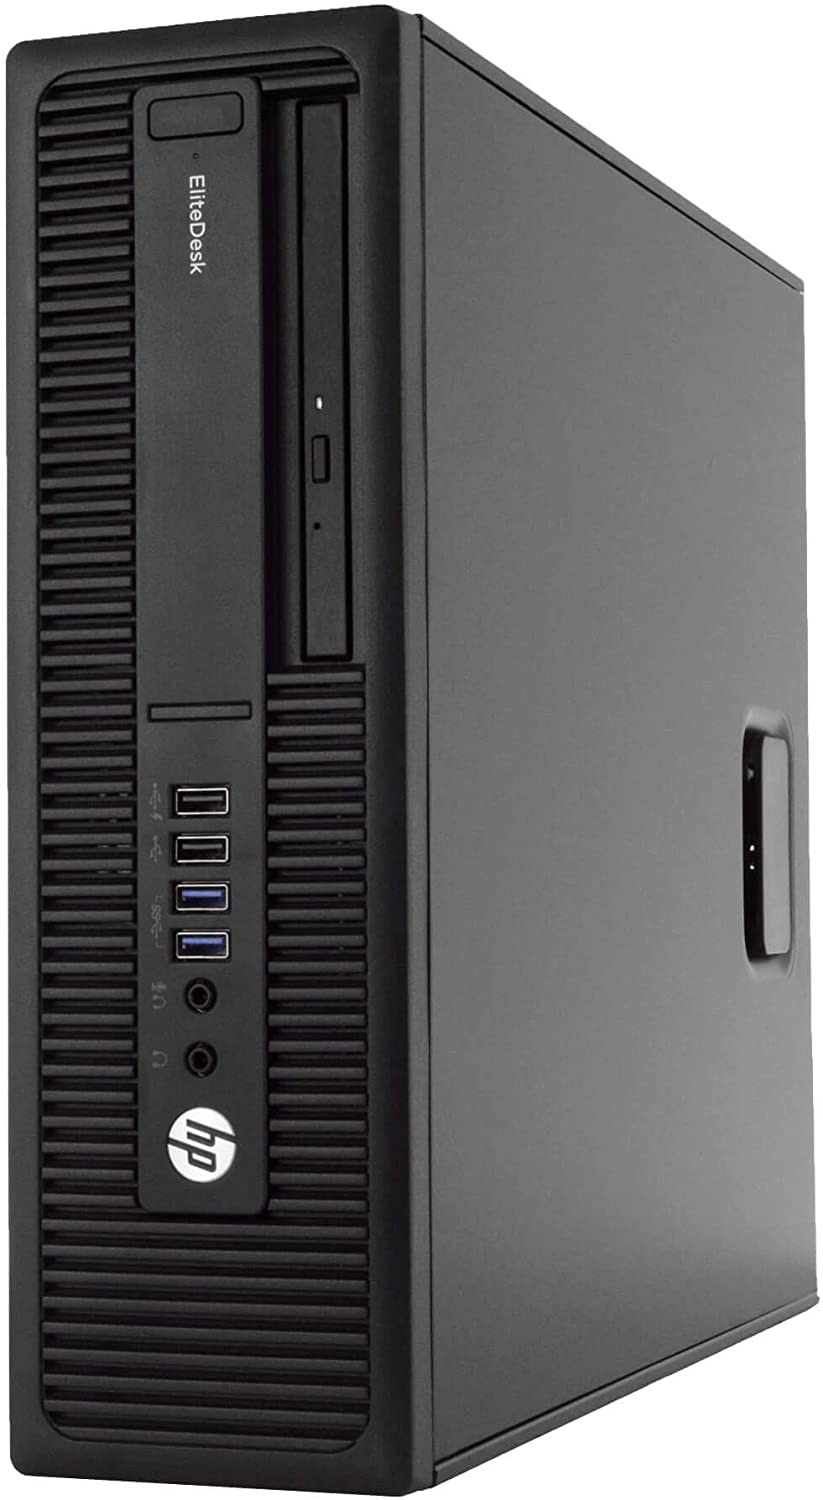 HP EliteDesk 800 G2 SFF Desktop PC: Intel Core i5-6500 Quad-Core 